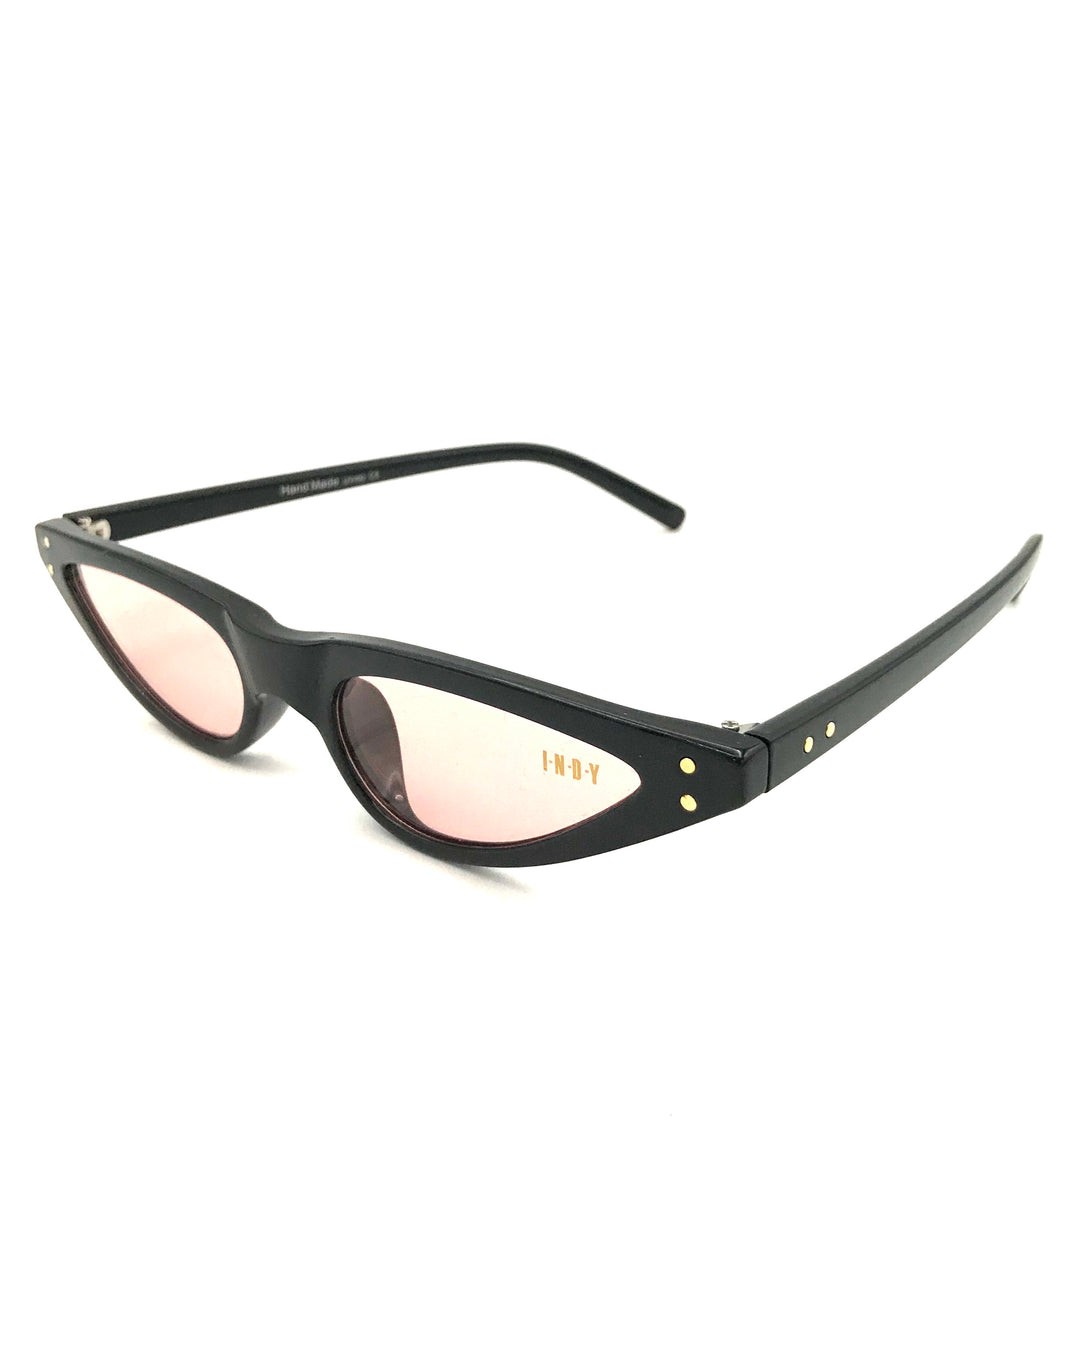 Black and Pink Slim Lens Sunglasses